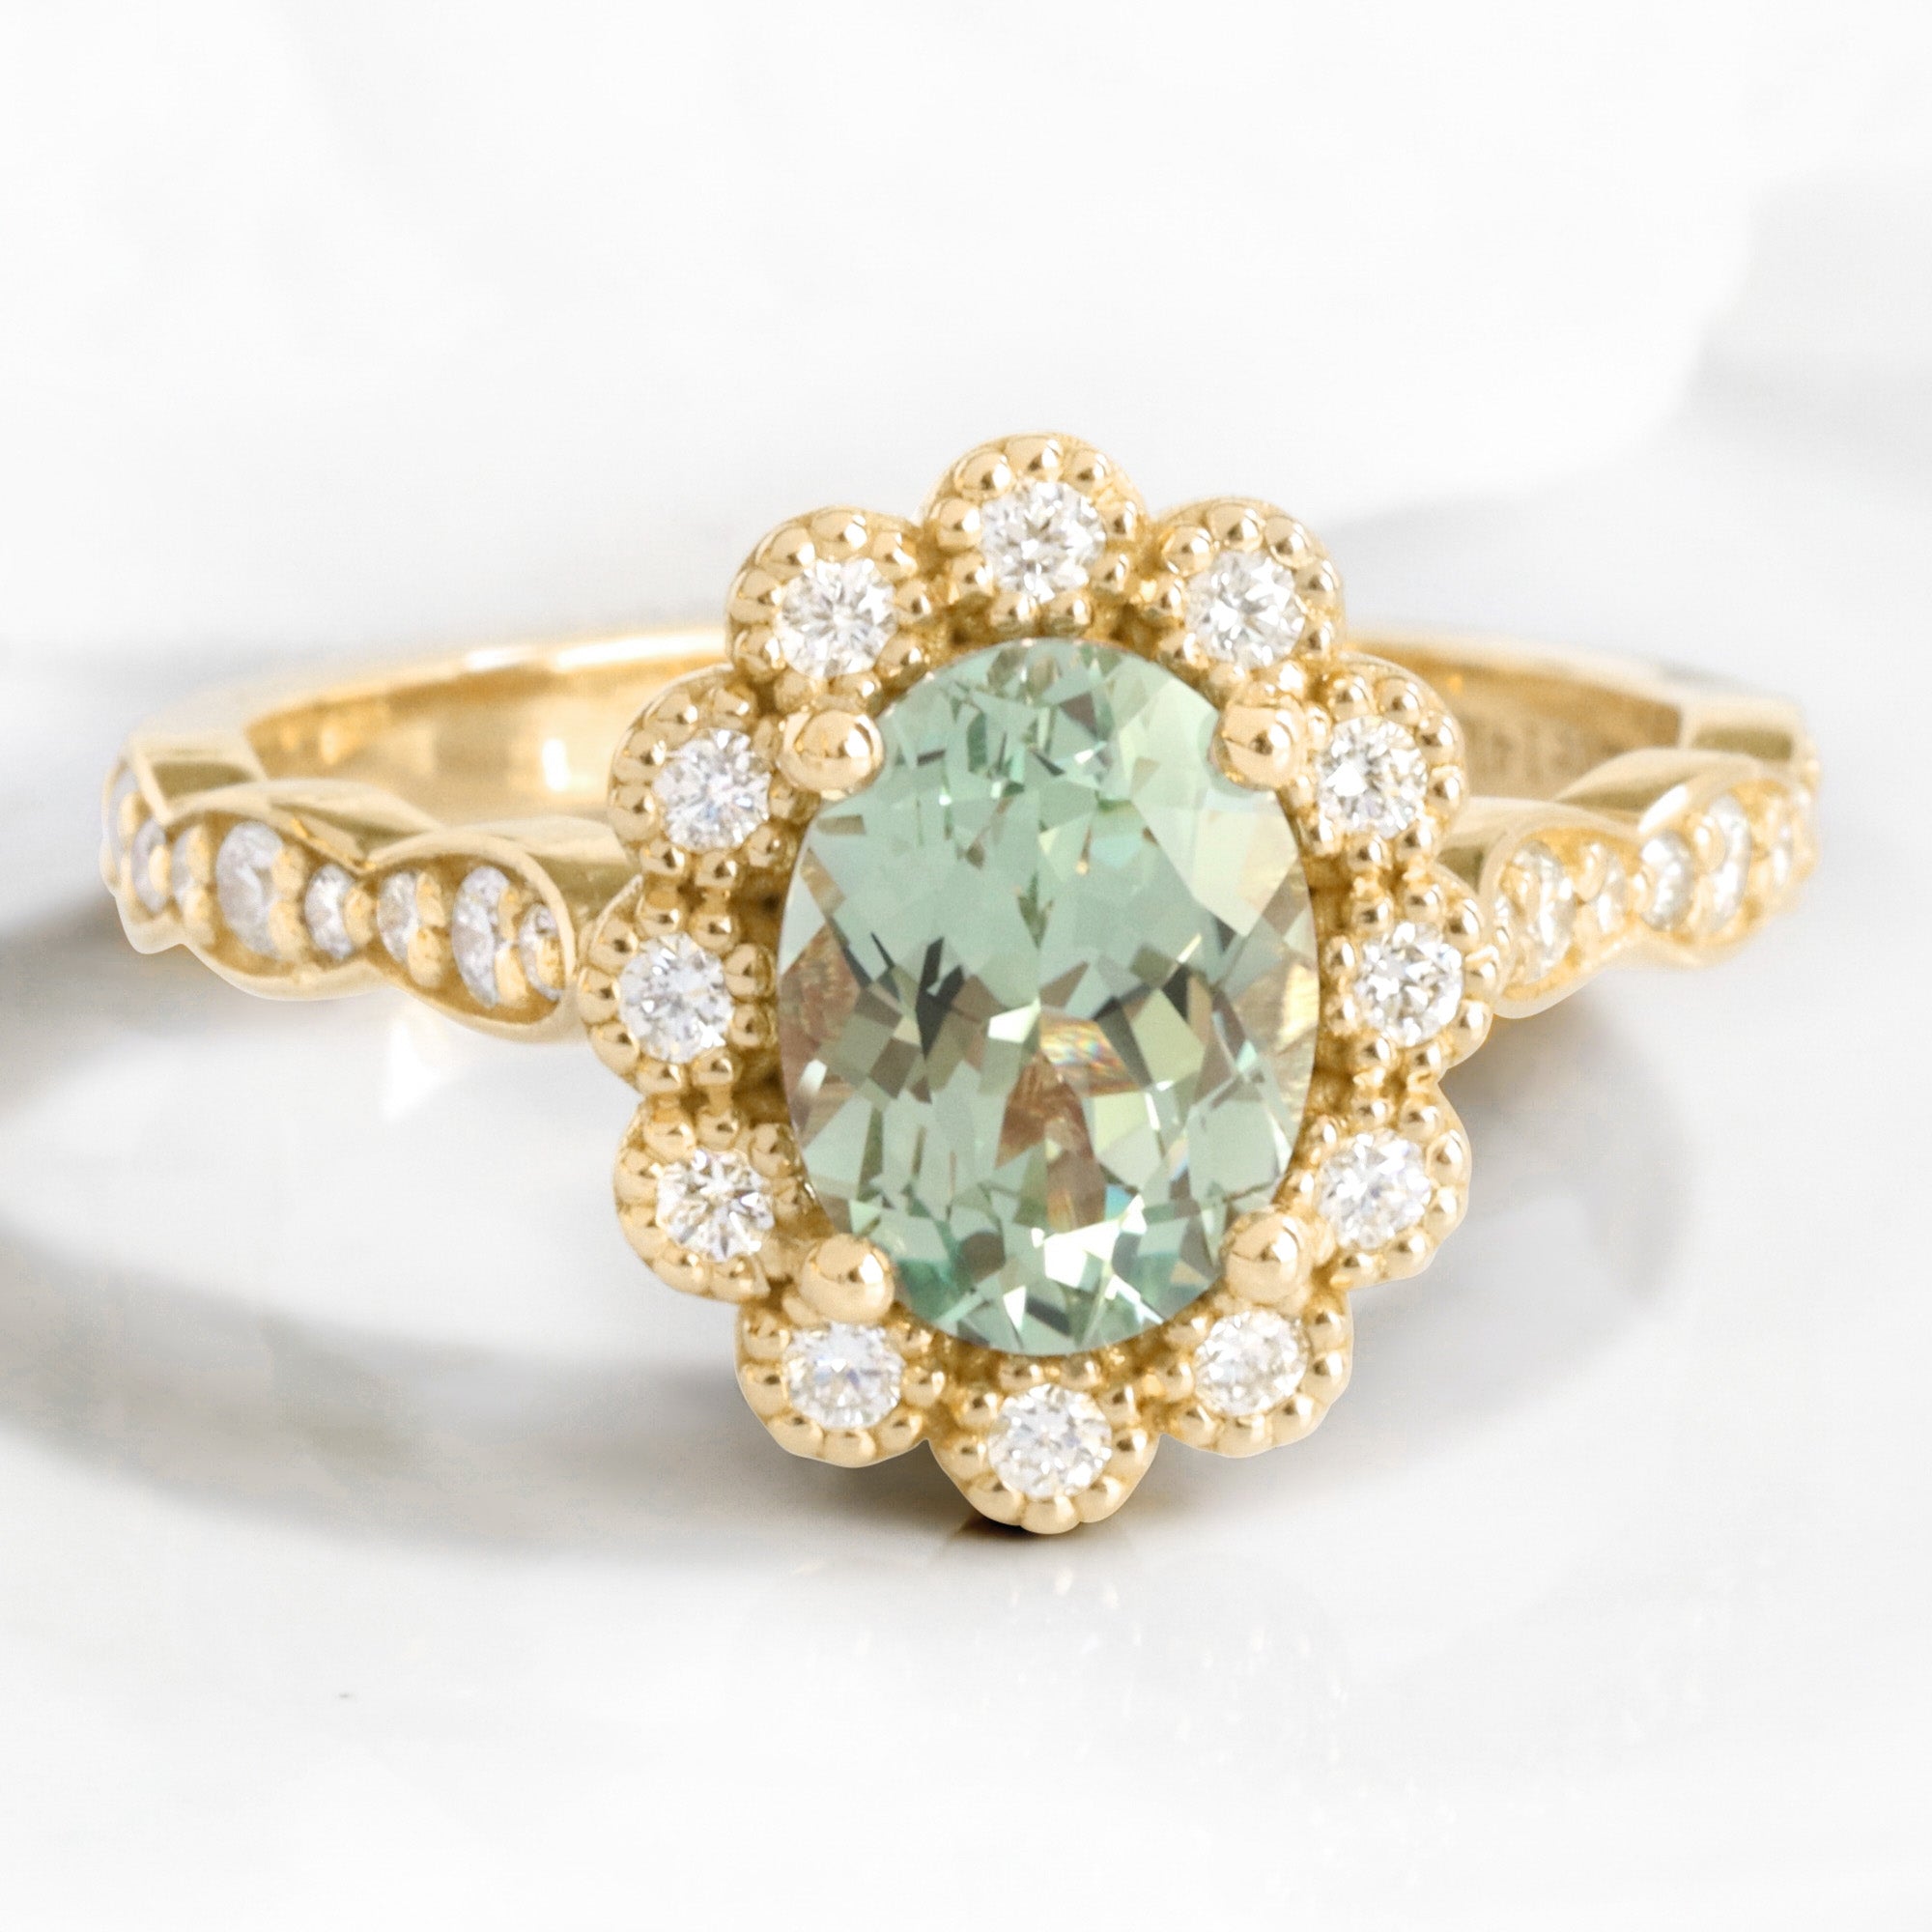 Oval seafoam green sapphire engagement ring yellow gold vintage halo diamond sapphire ring la more design jewelry